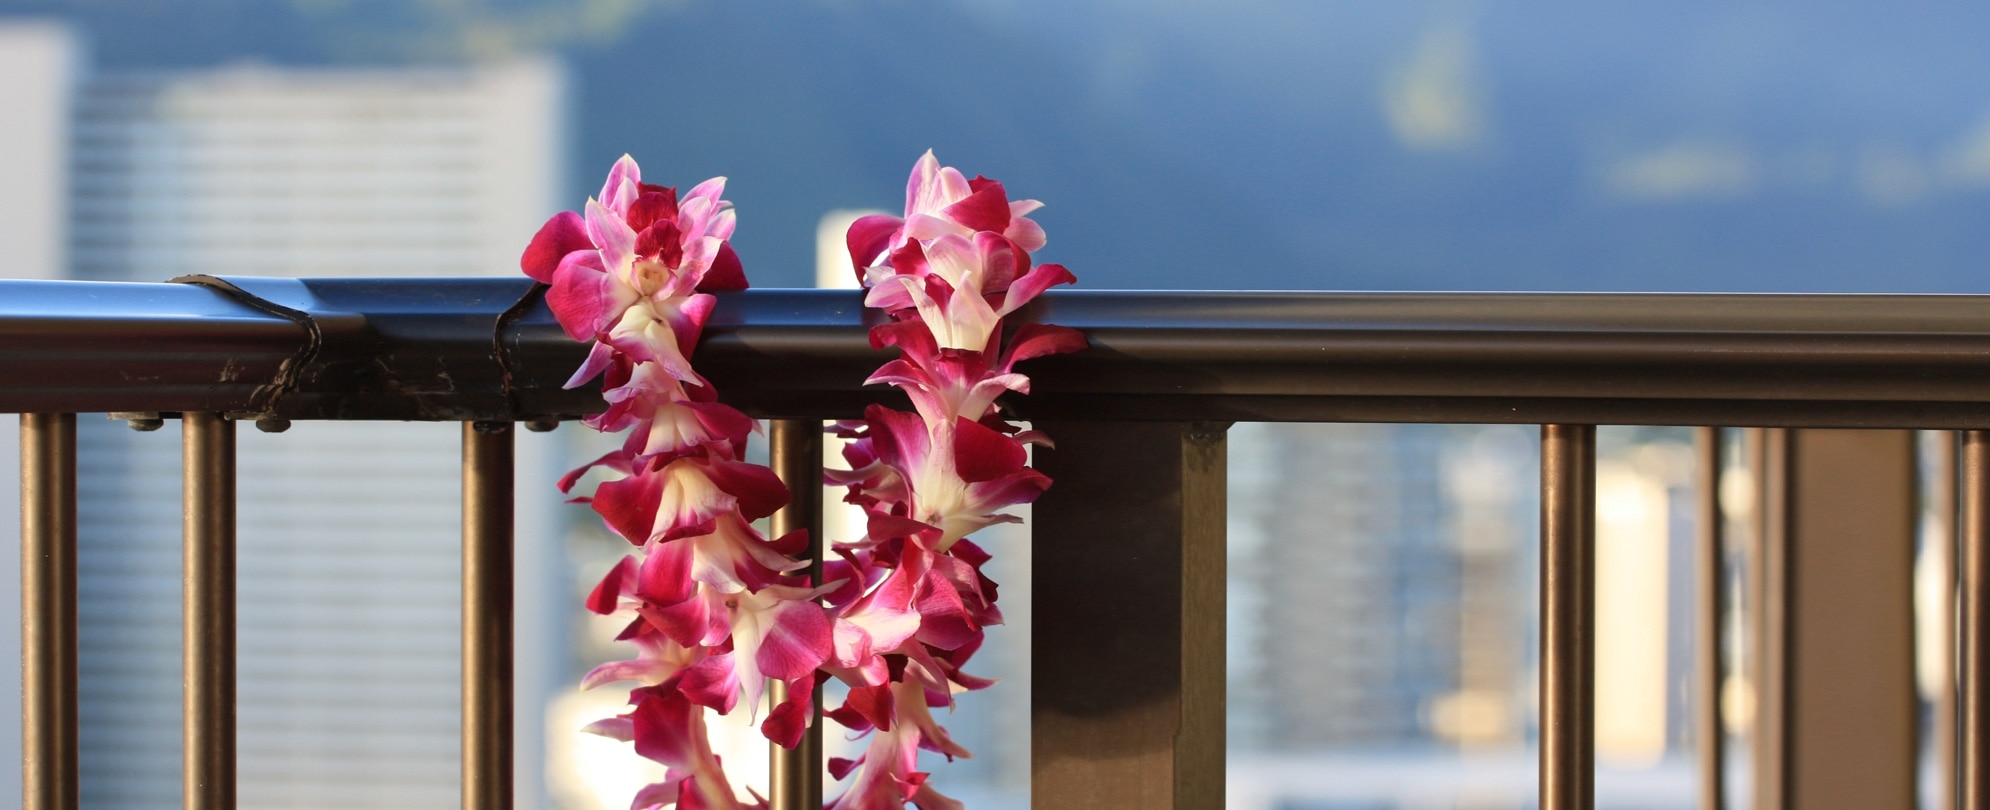 Purple orchid lei hanging on balcony railing 